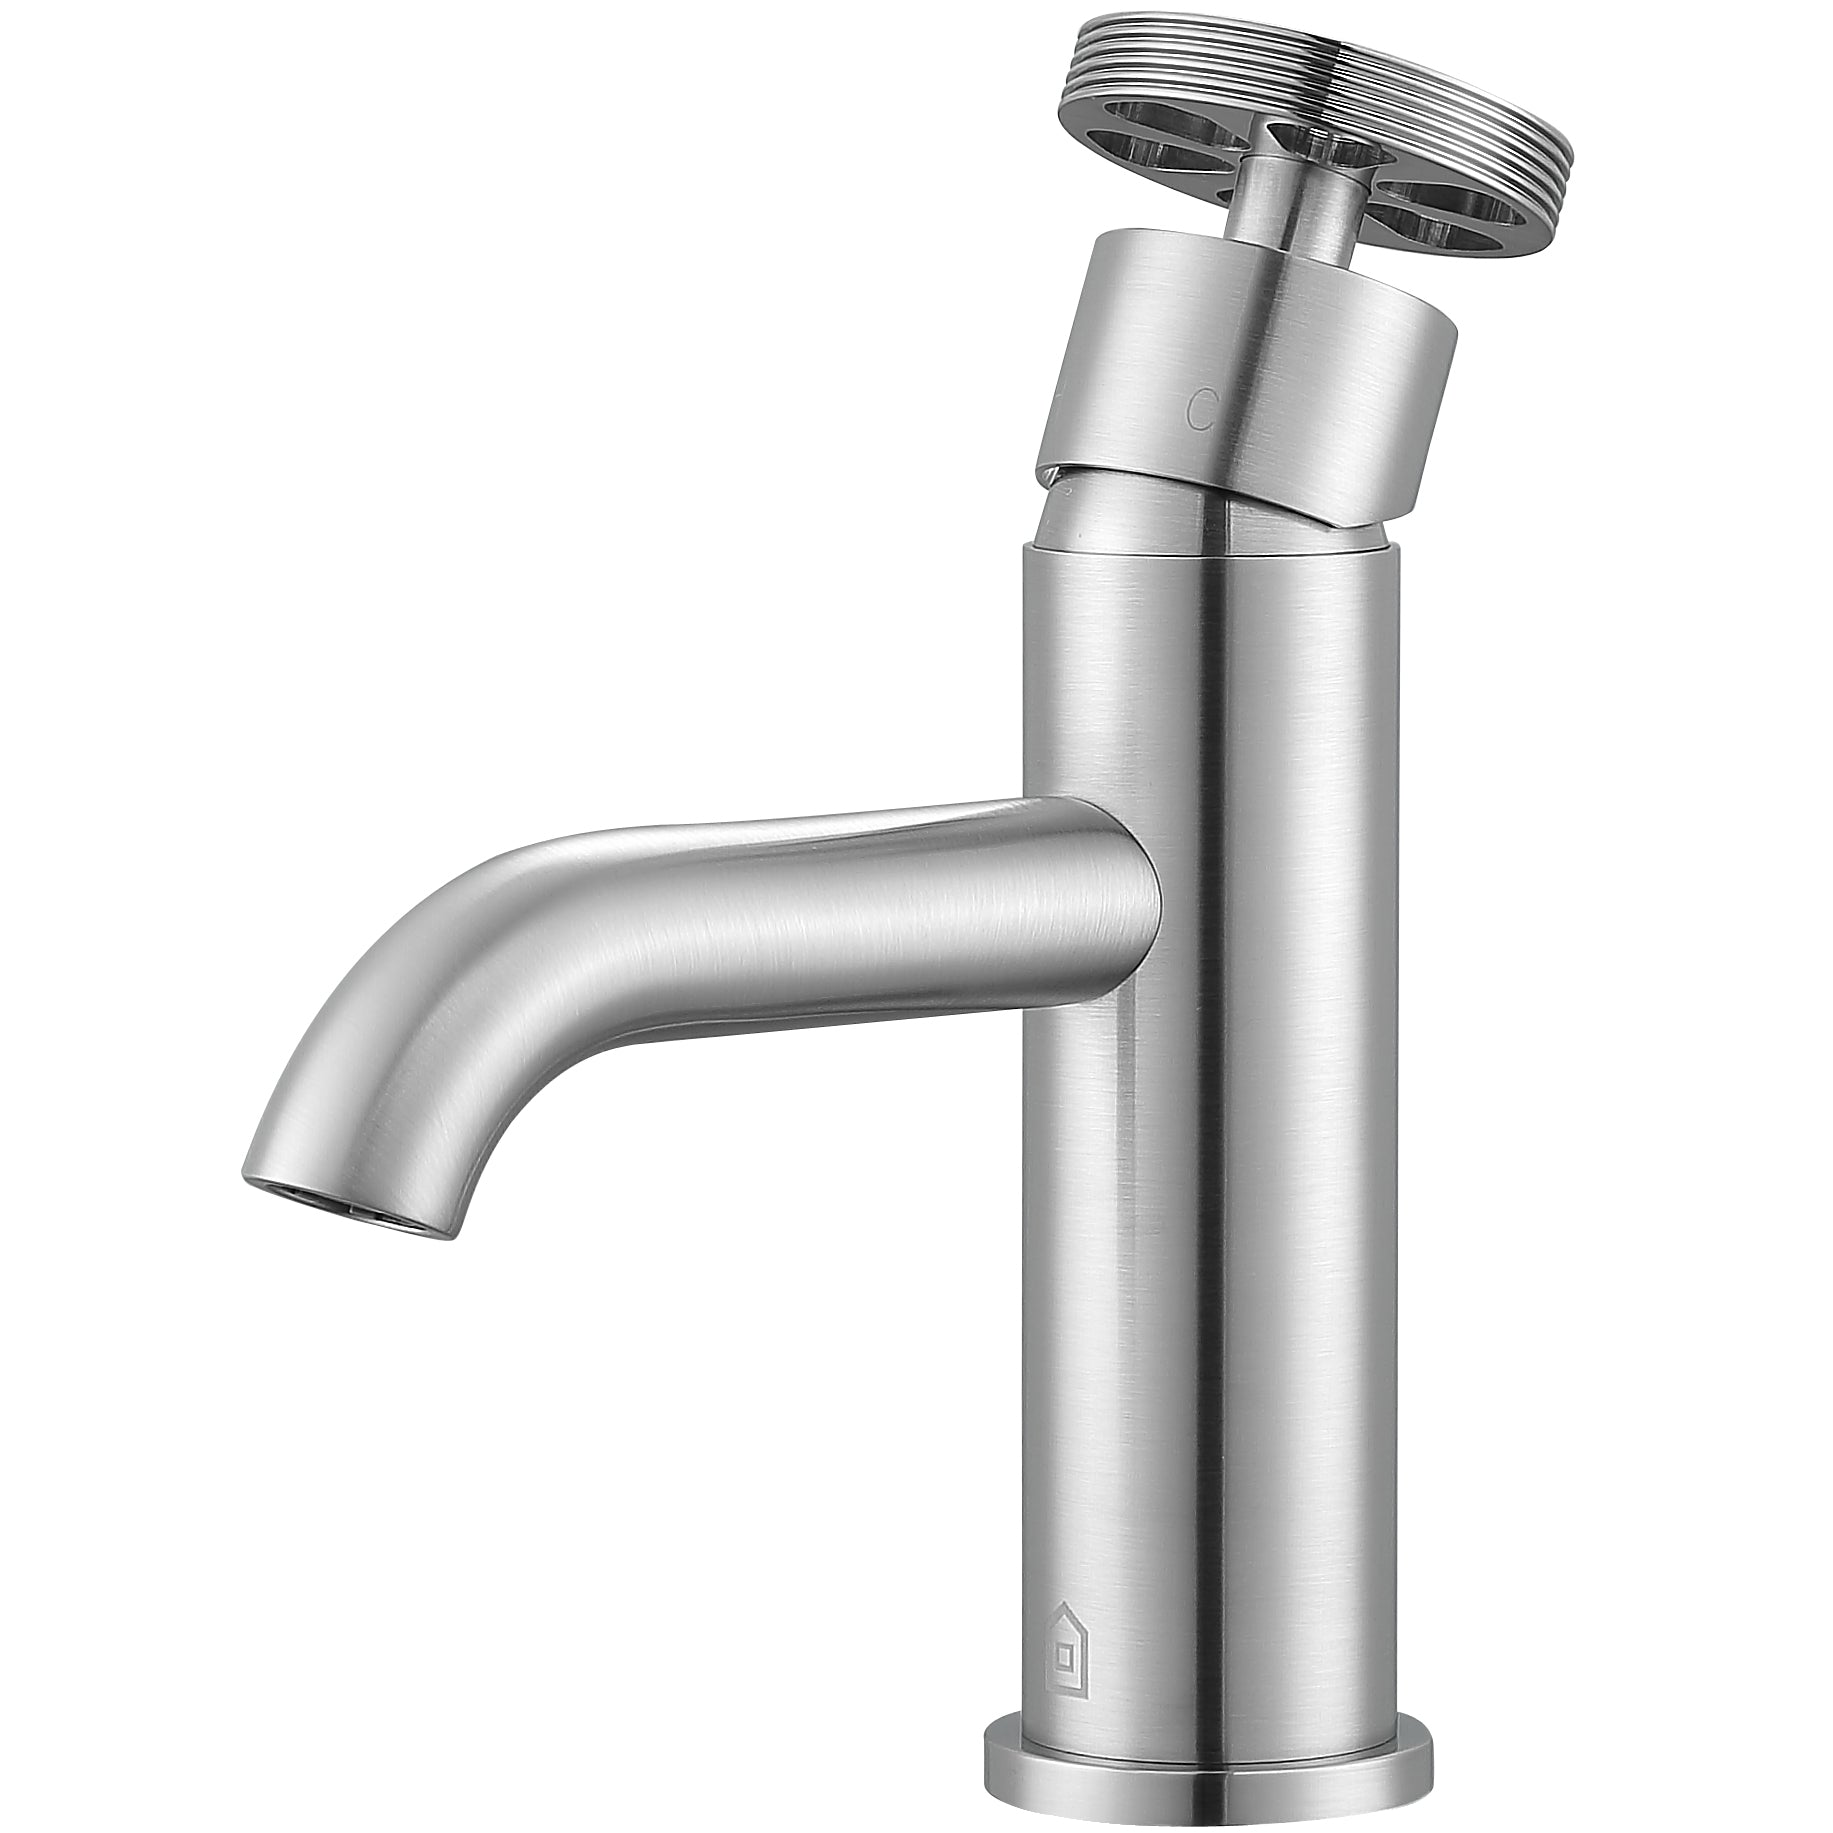 Ancona Nova Series Single Lever Bathroom Faucet in Brushed Nickel